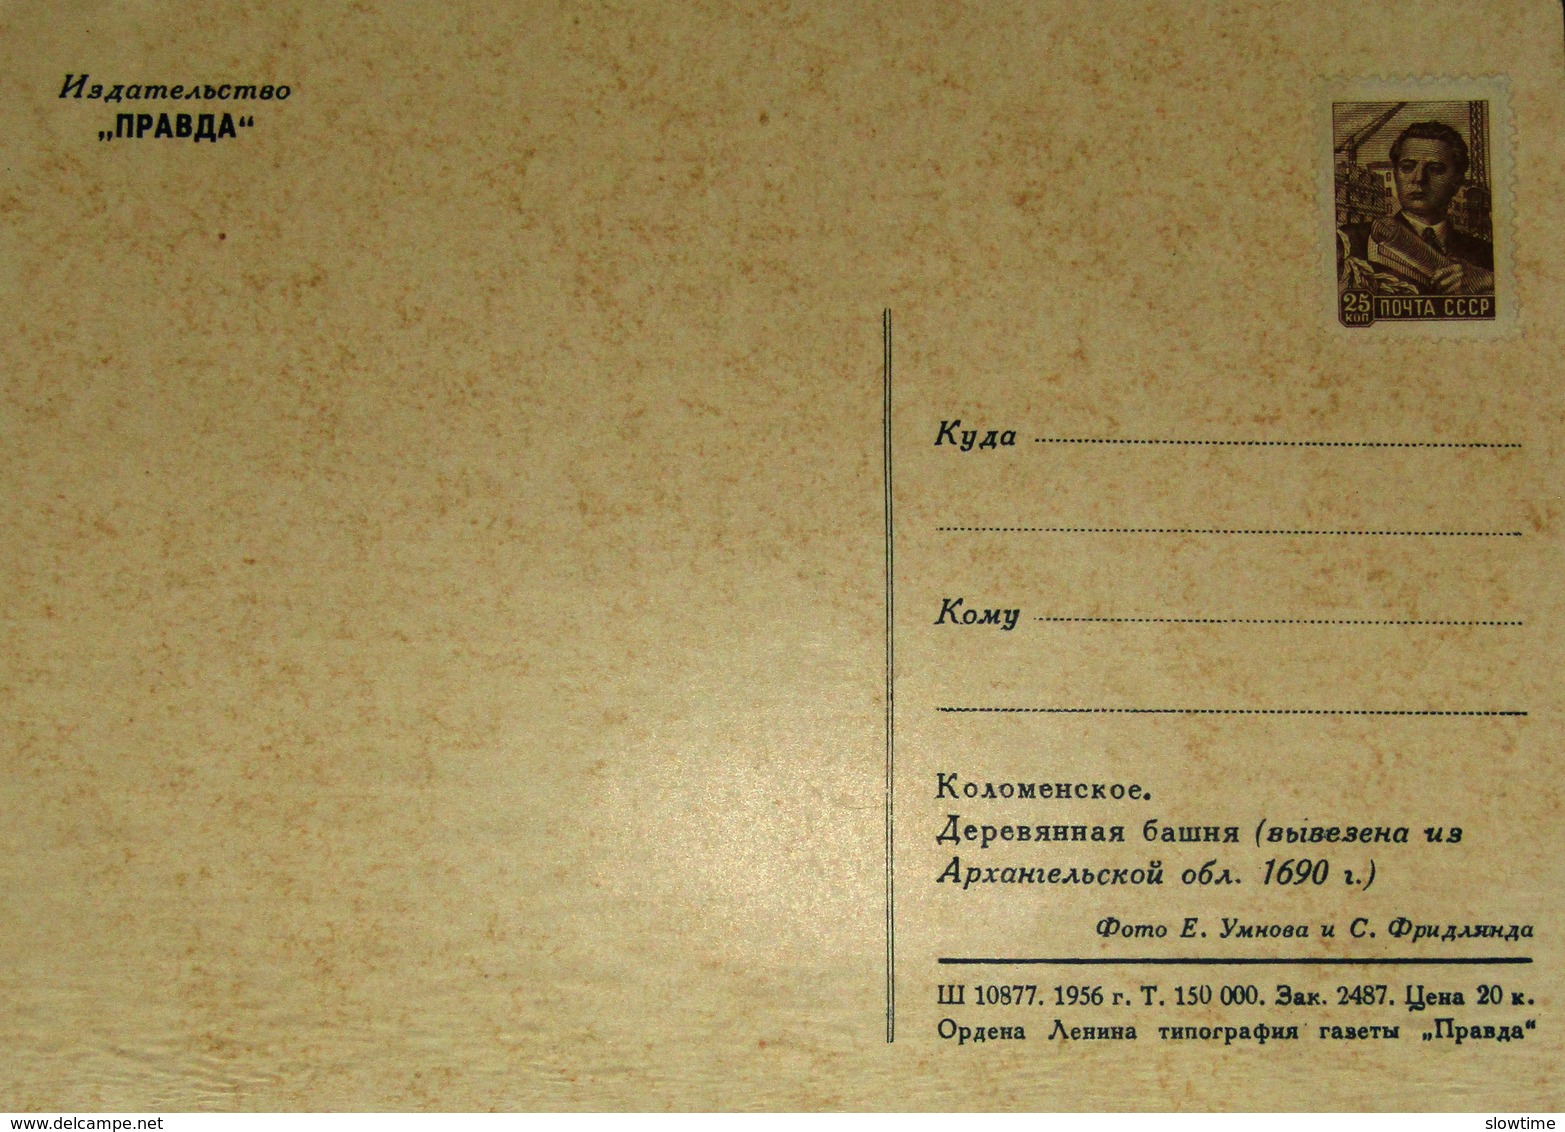 USSR Old Postcard Moscow Region Kolomenskoye Ancient Wooden Tower Of Arkhangelsk 1690 - Castles